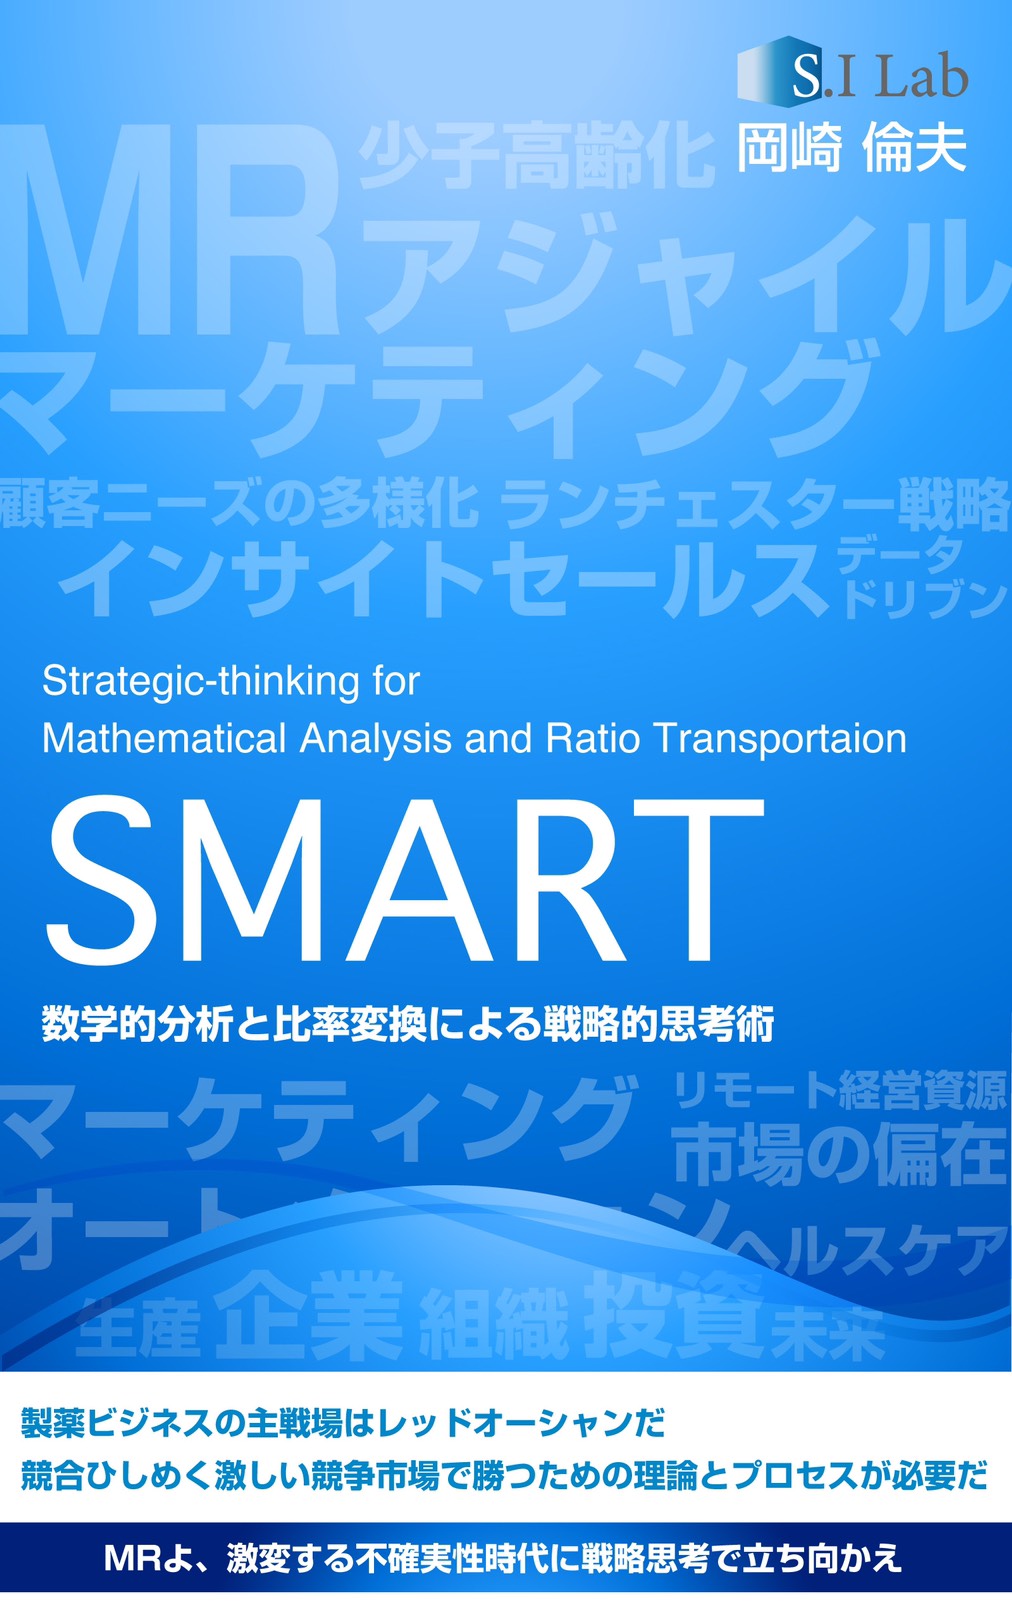 SMART
												Strategic-thinking for Mathematical Analysis and Ratio Transportation